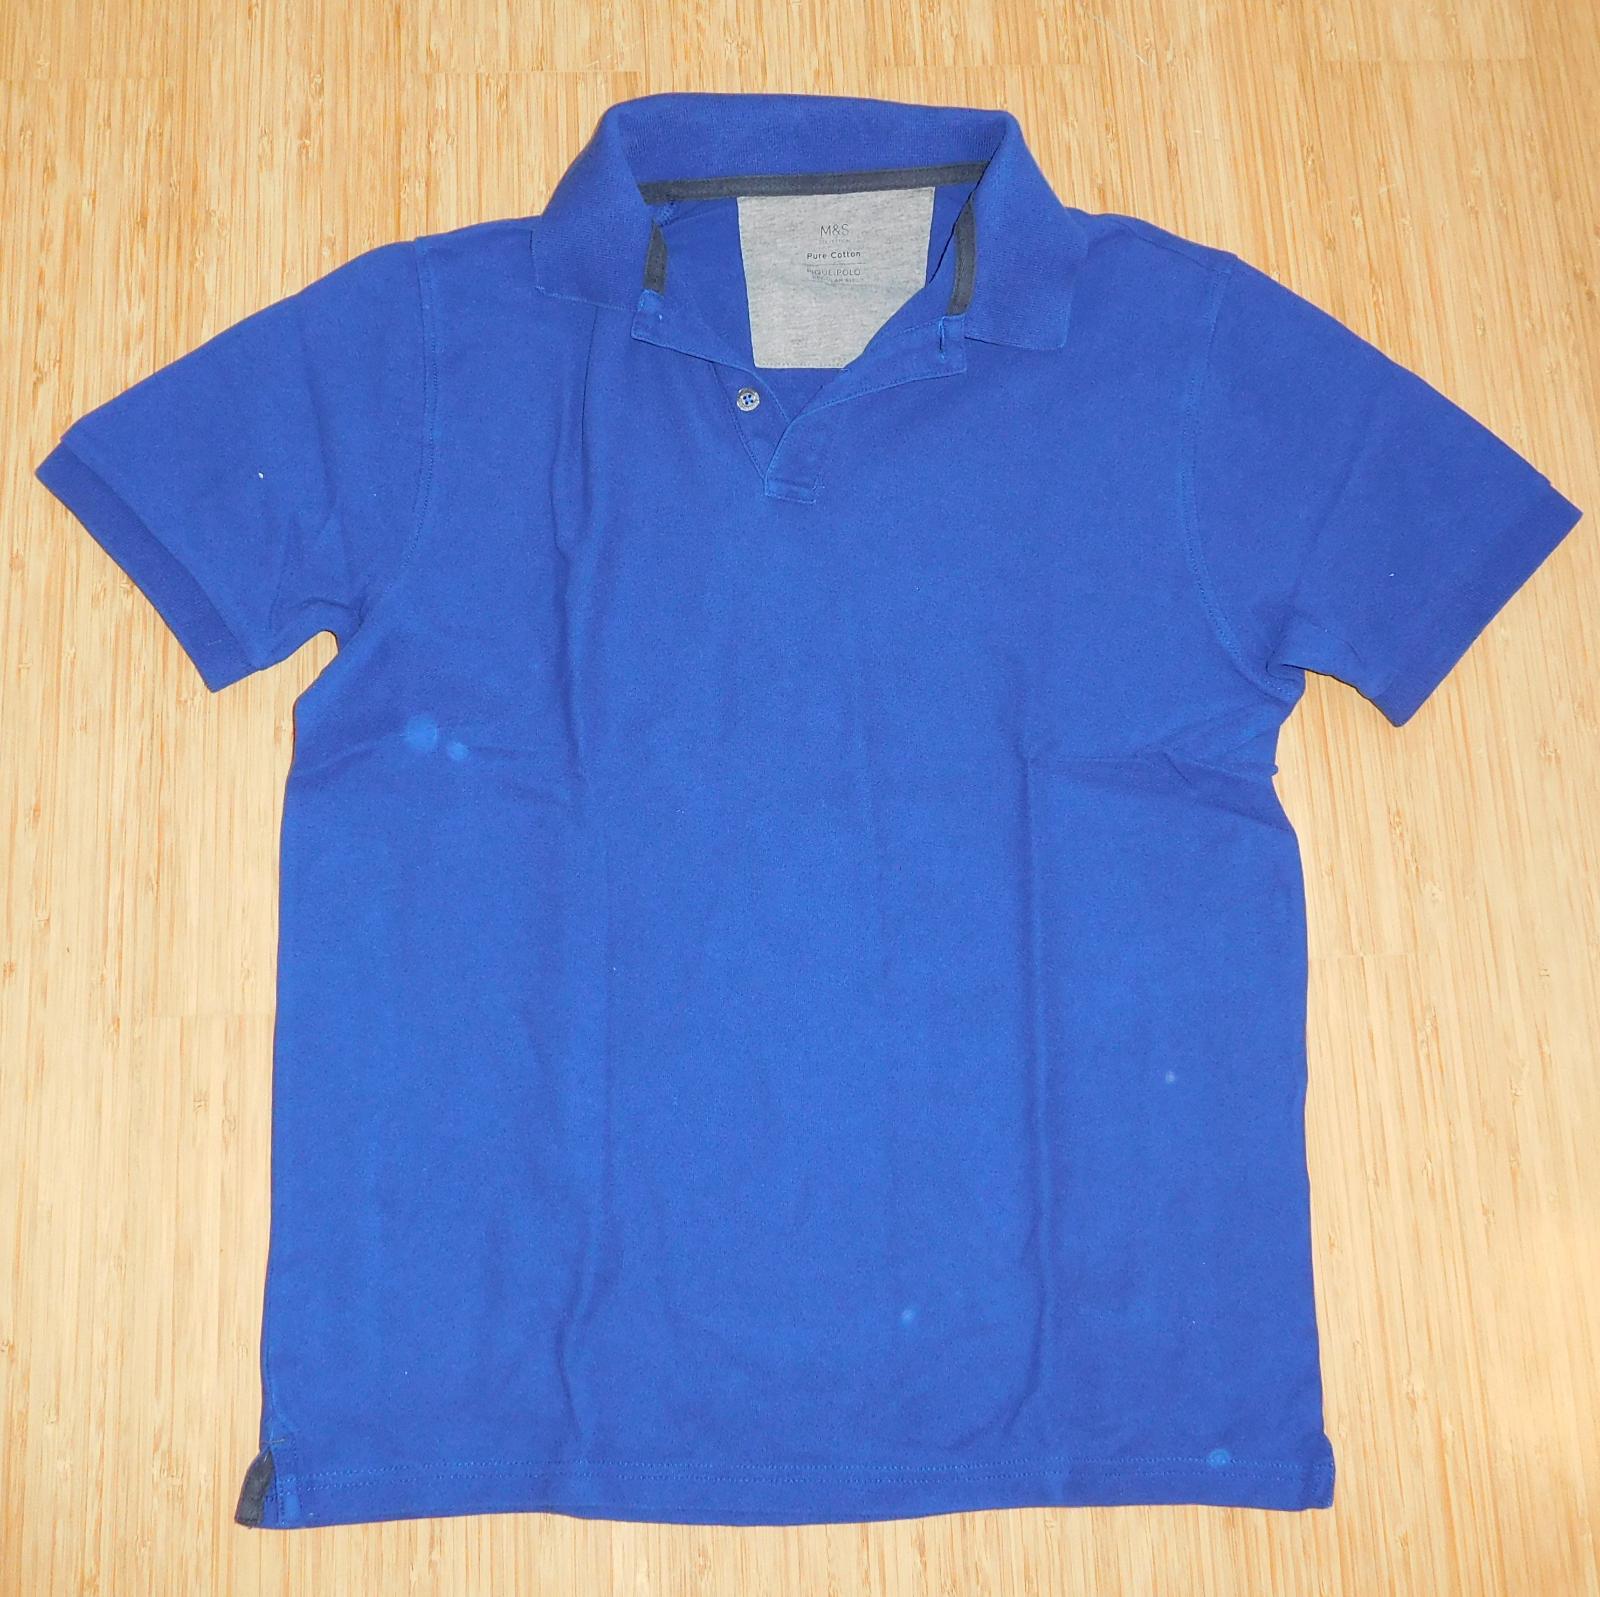 M&S - modré tričko s golierom - S - Pánske oblečenie